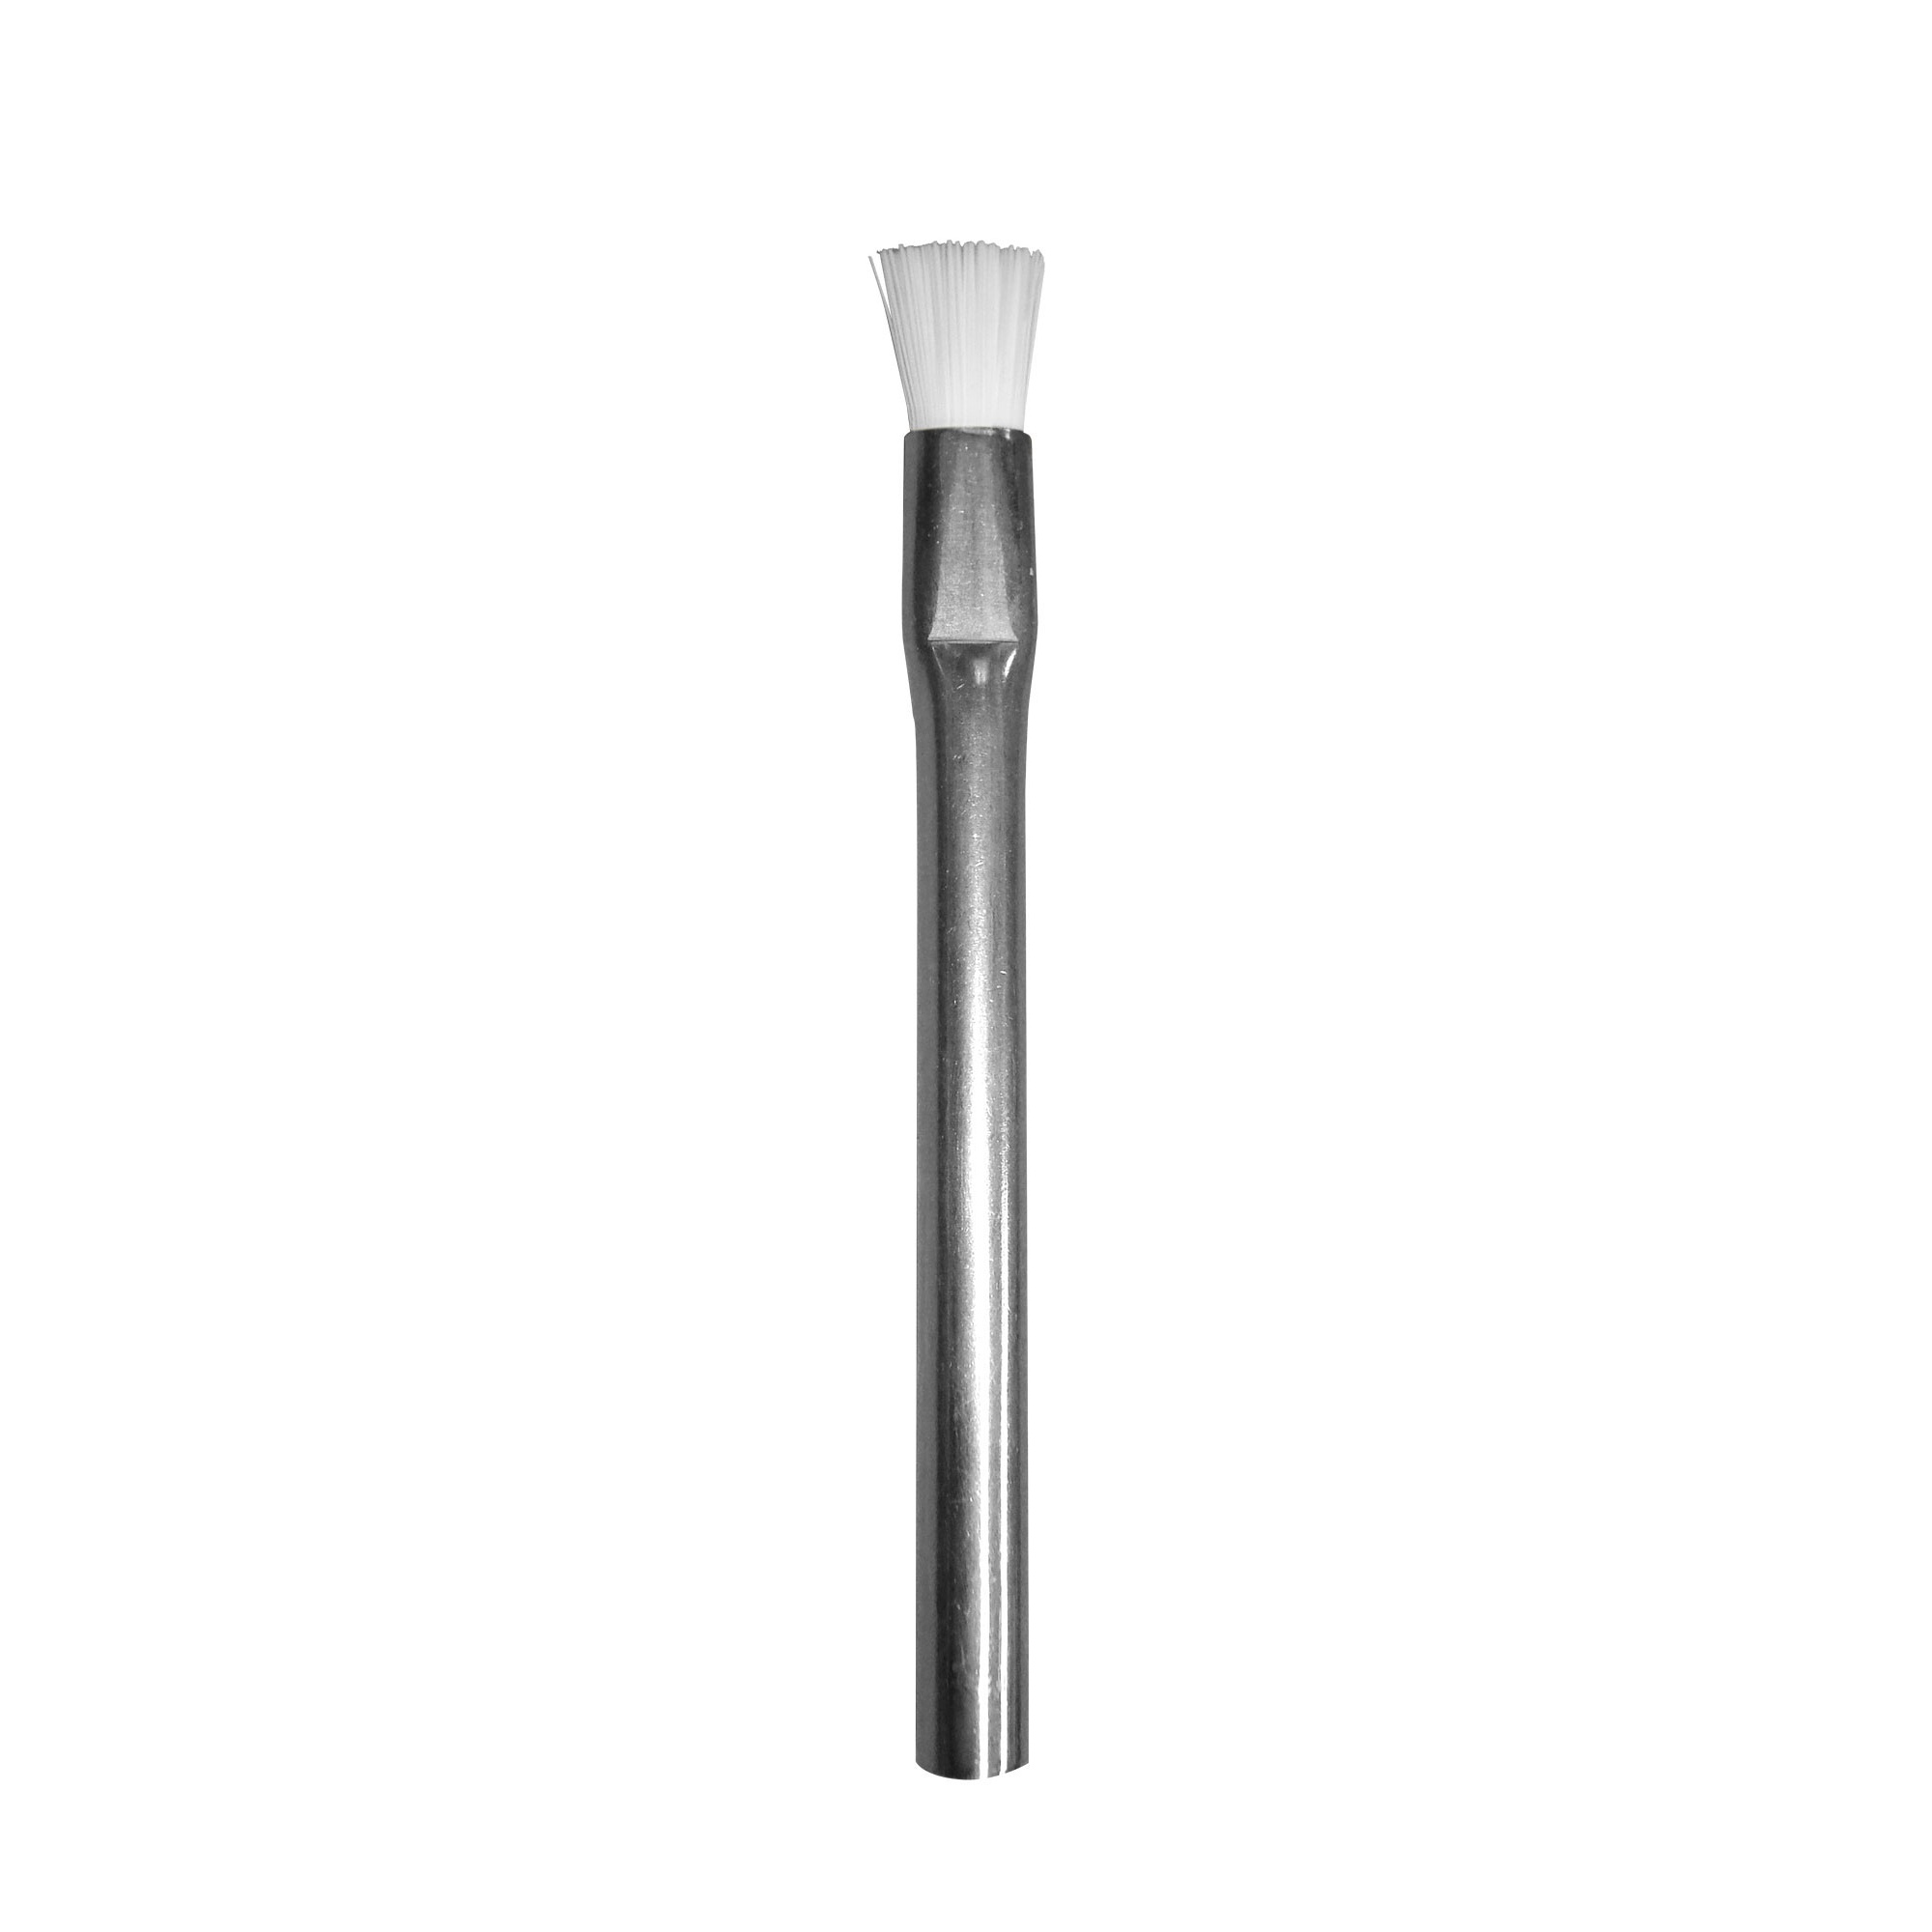 Applicator Brush — 0.011" PTFE Bristle / 3/16" Diameter Stainless Steel Tube Handle